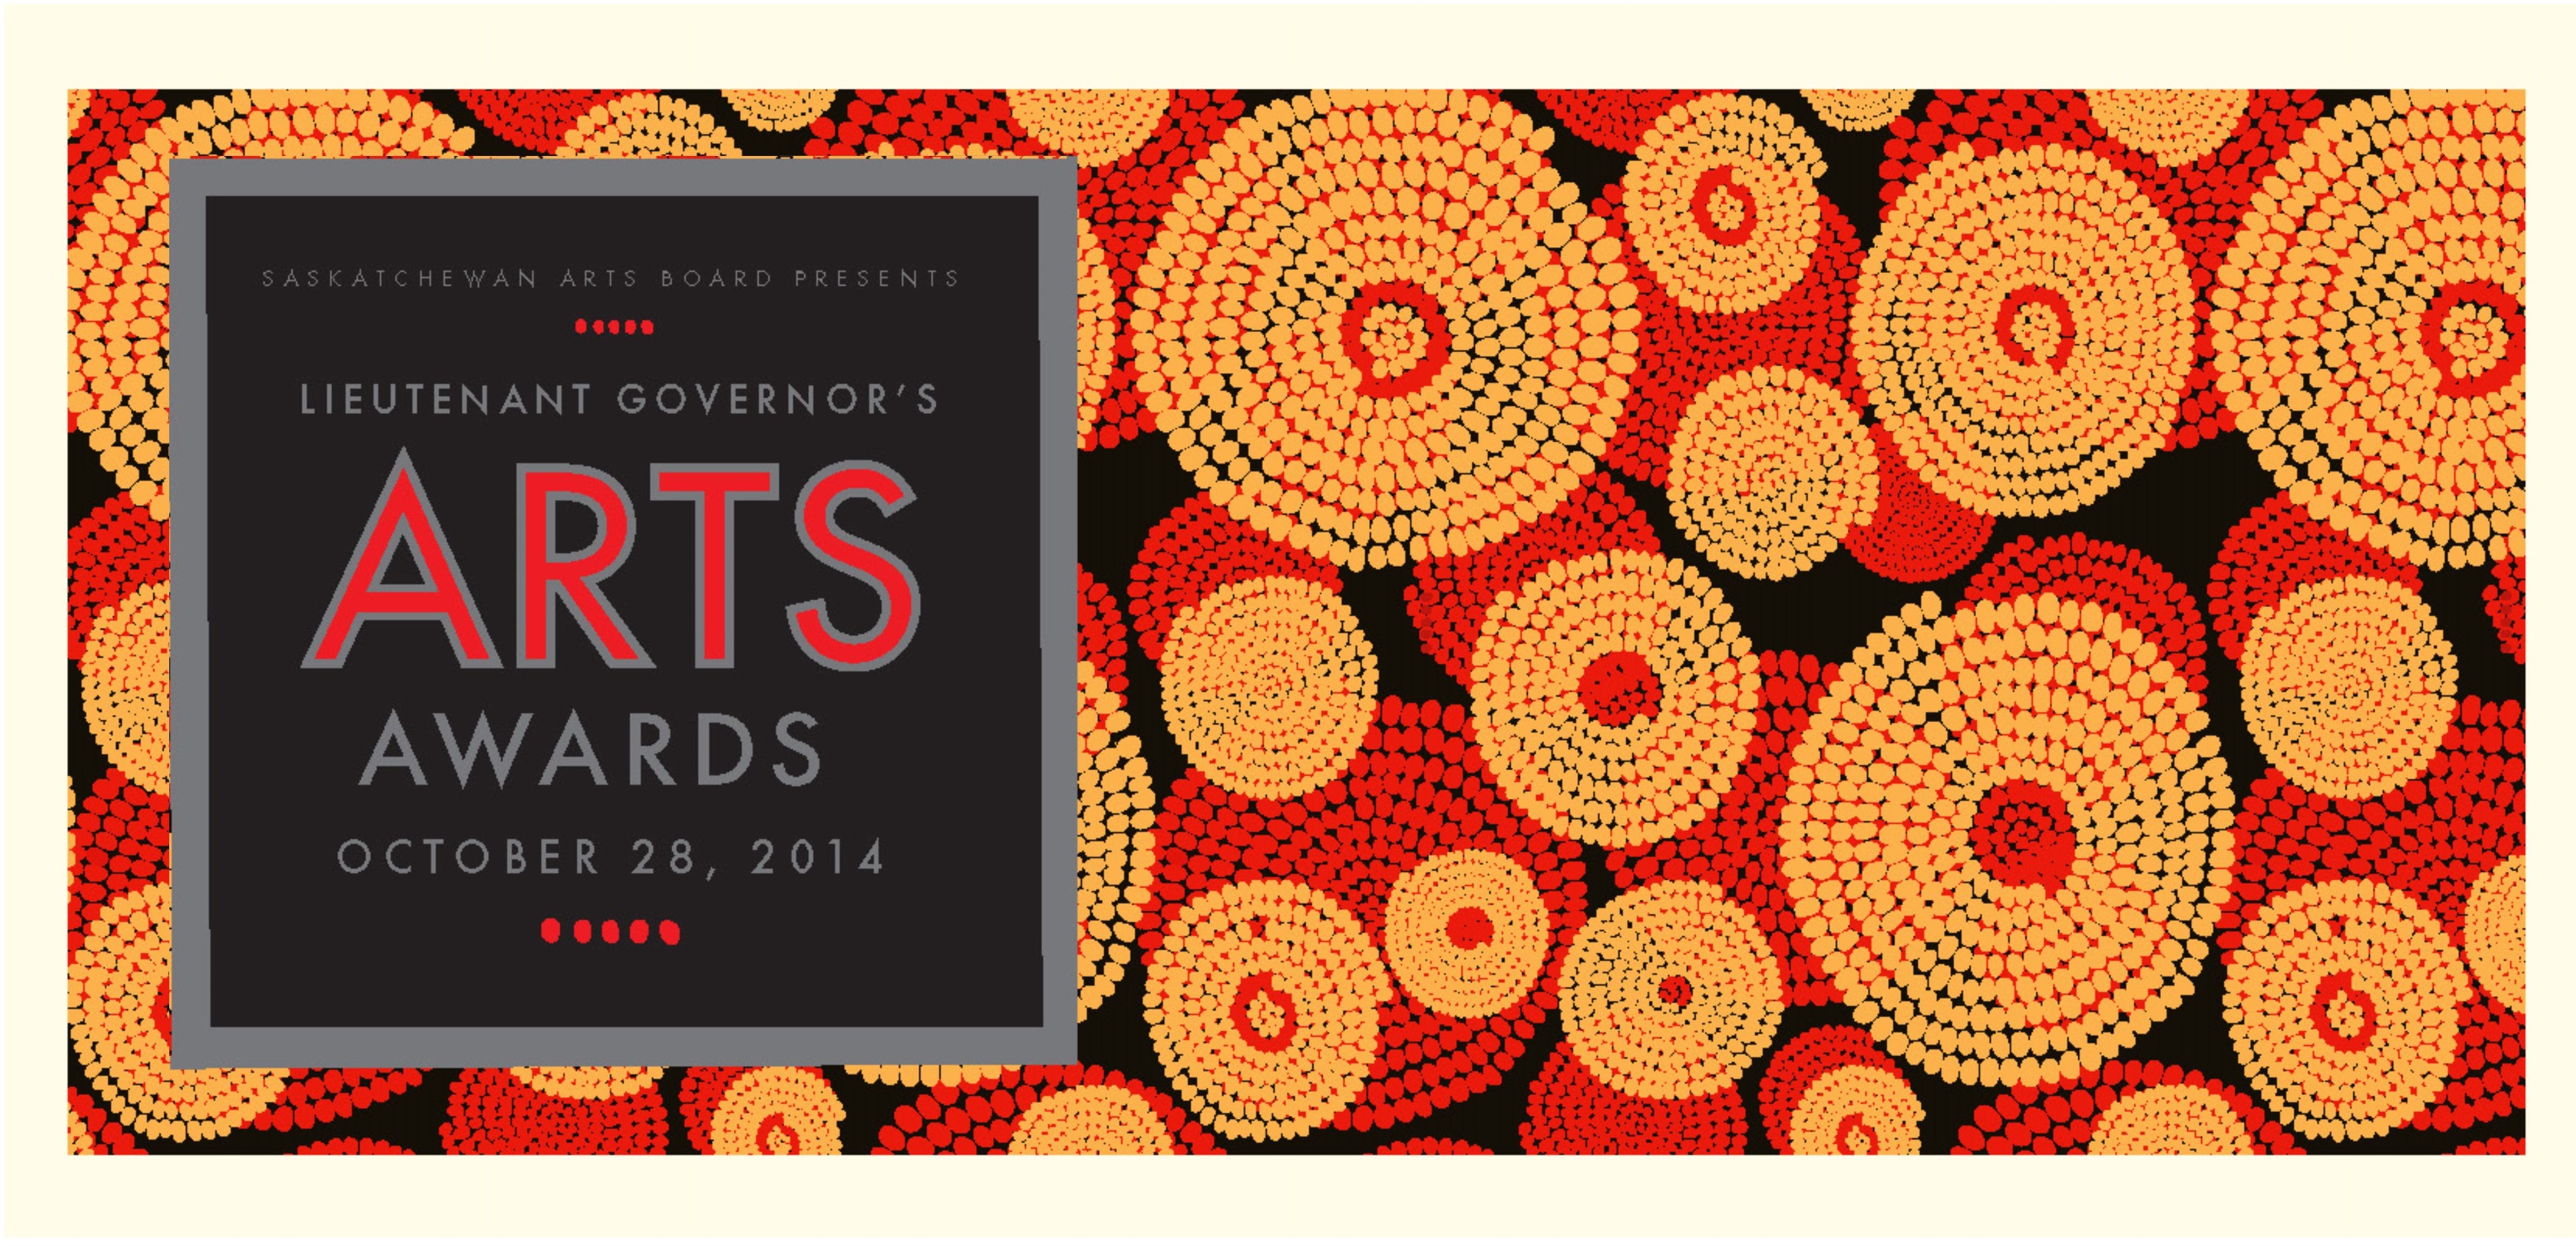 Lieutenant Governor's Arts Awards | October 28, 2014